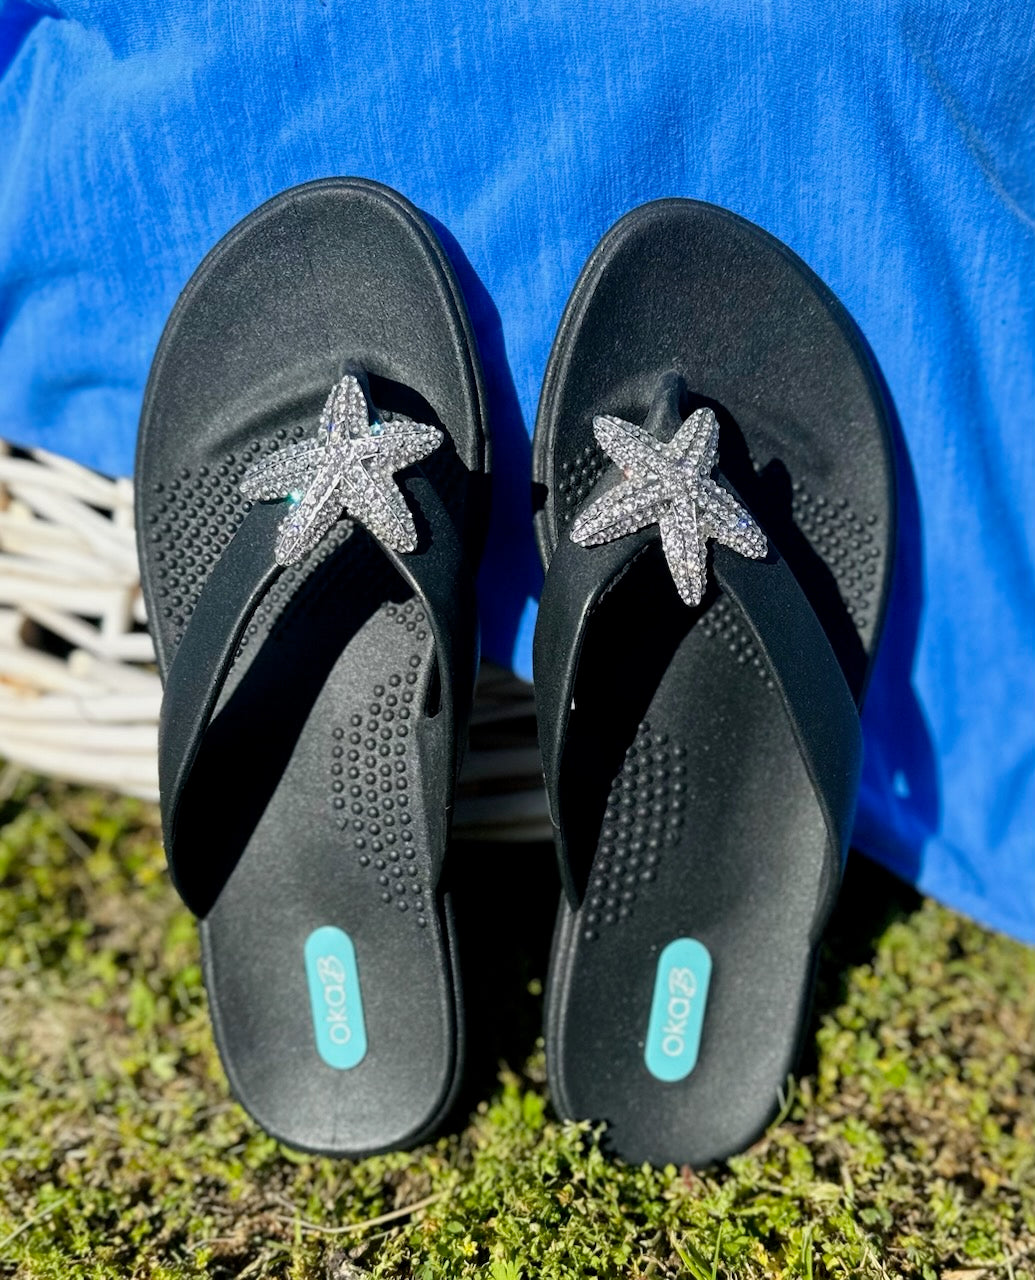 OkaB Black Starfish Sandals